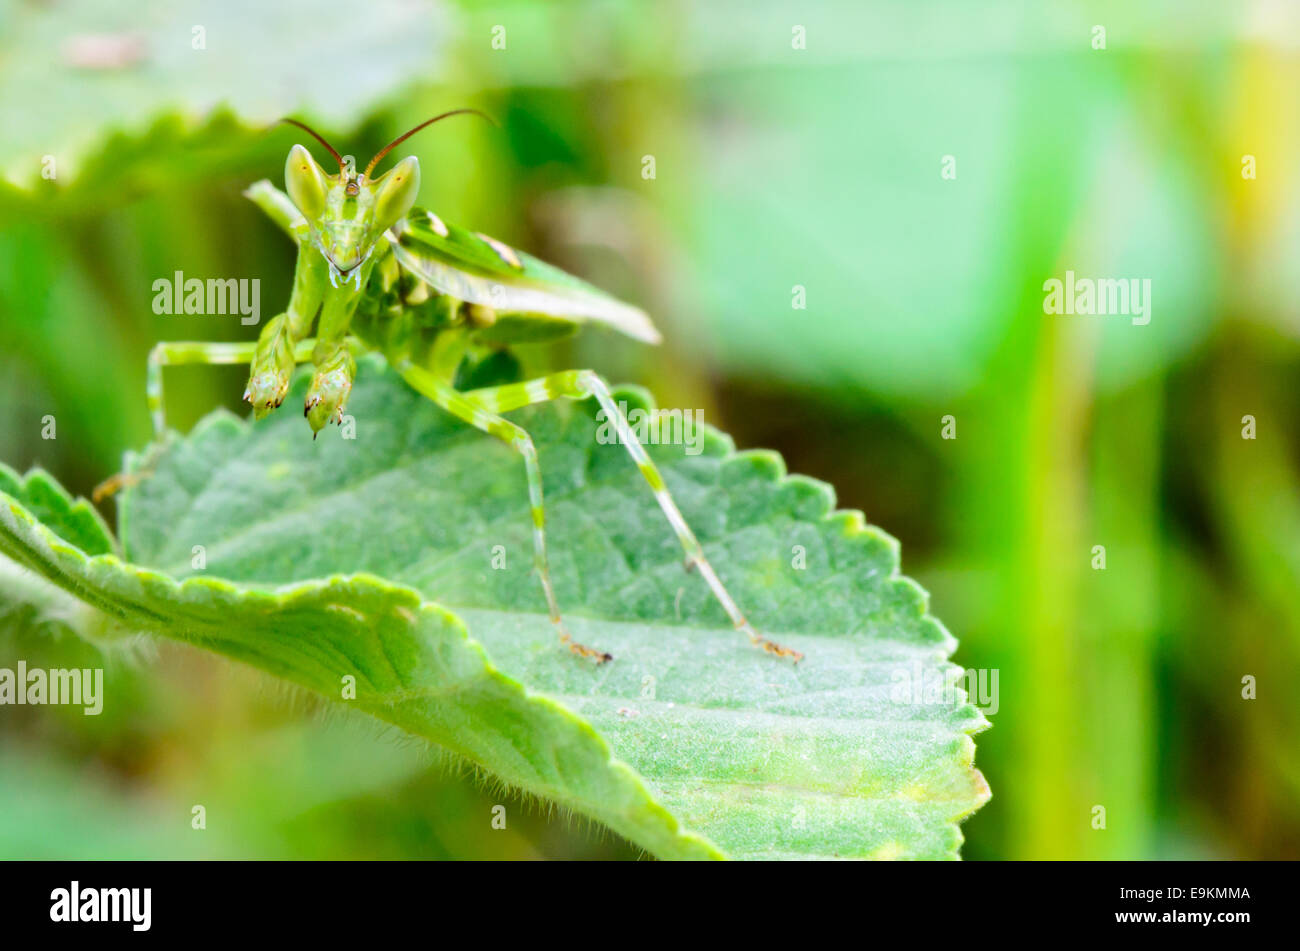 Creobroter Gemmatus, Jeweled Flower Mantis or Indian Flower Mantis on plant leaf Stock Photo